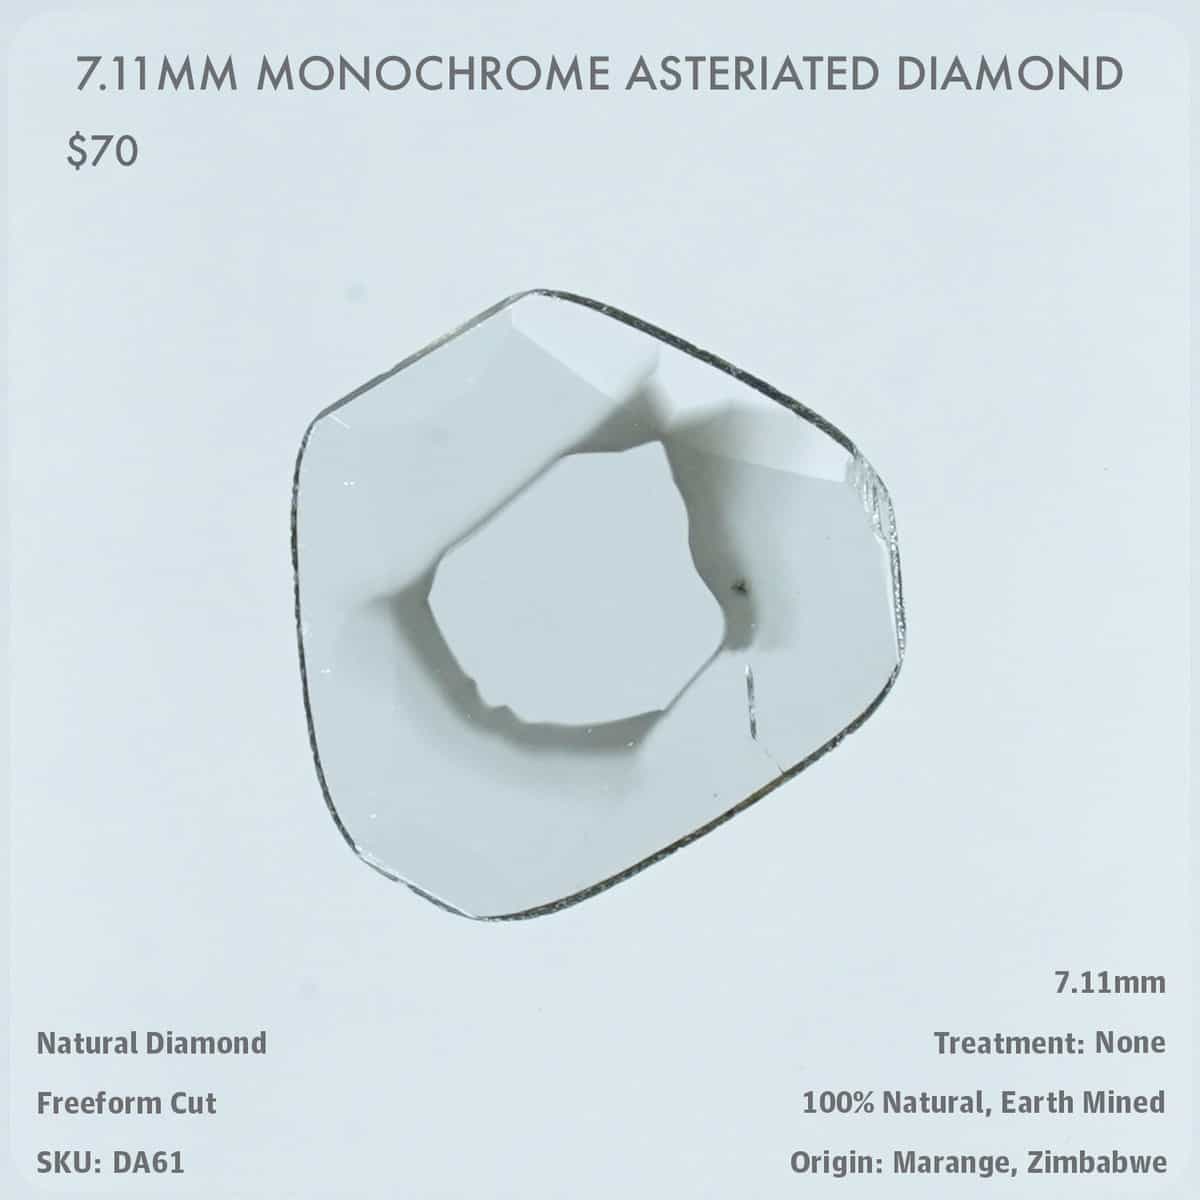 7.11mm Monochrome Asteriated Diamond